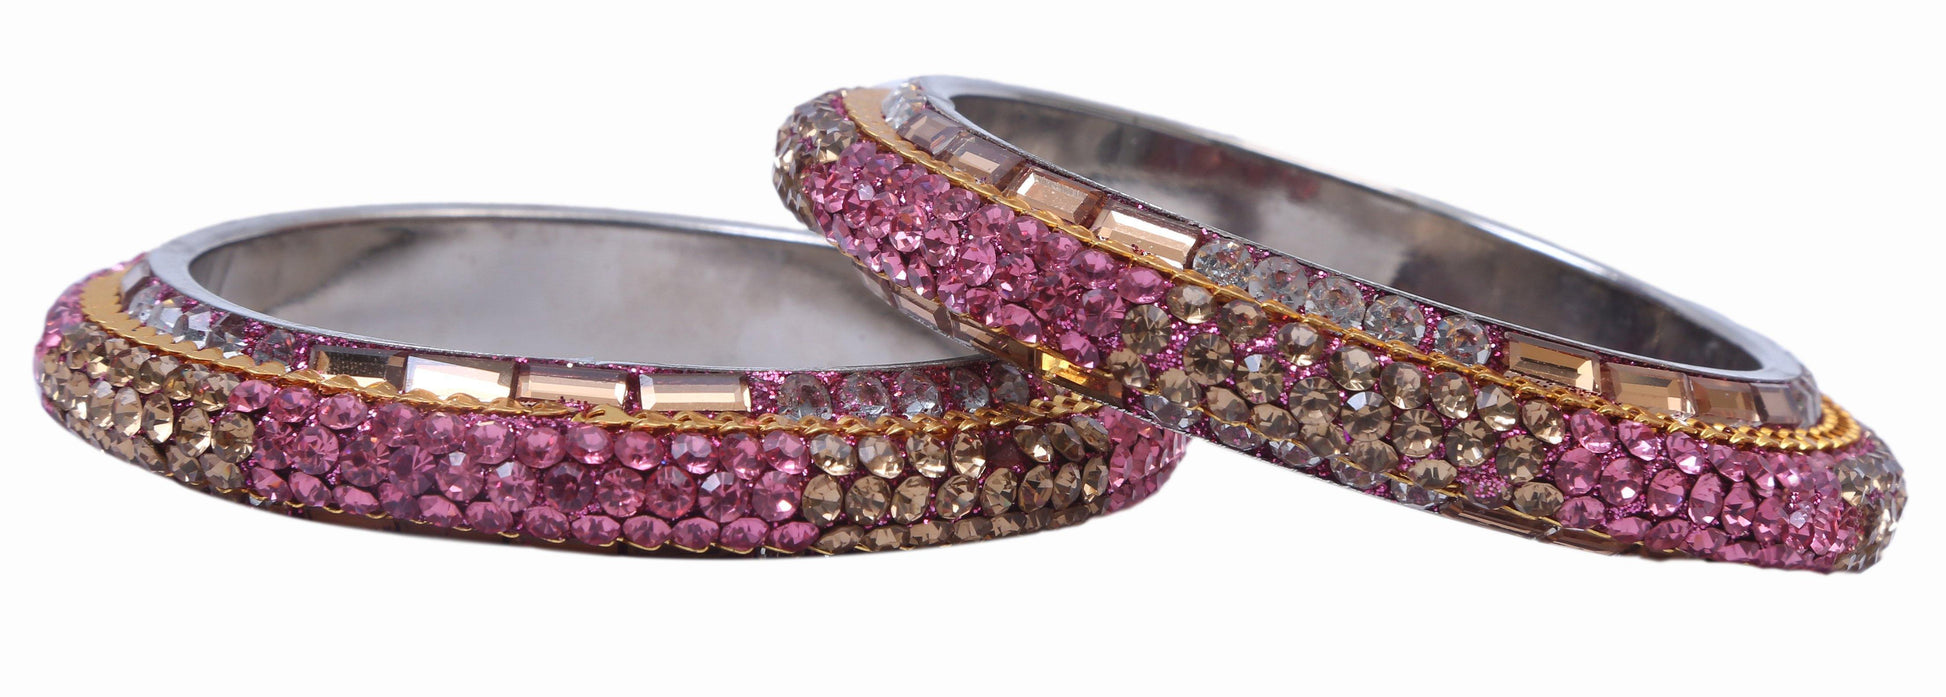 sukriti traditional stylish party-wear pink brass bangles bracelet for women & girls - set of 2